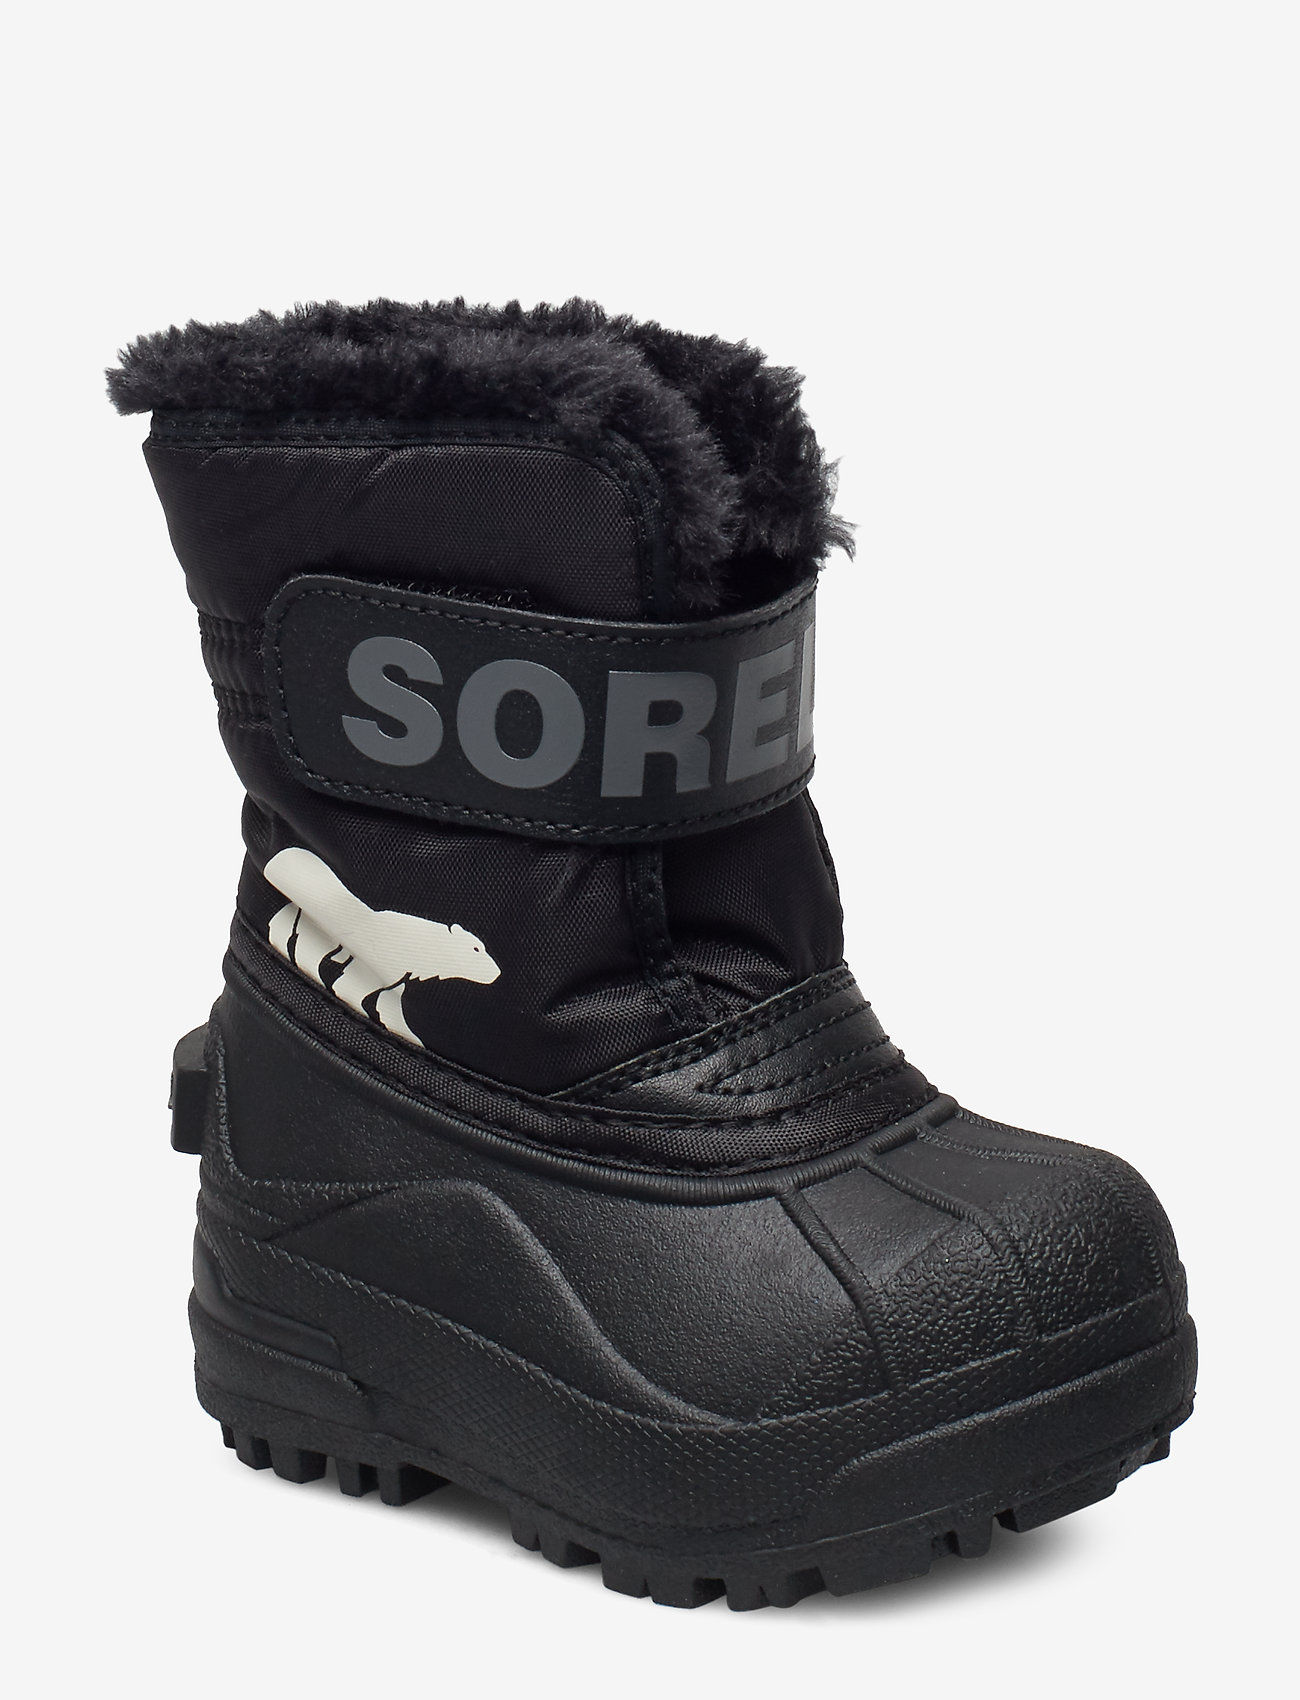 sorel childrens boots